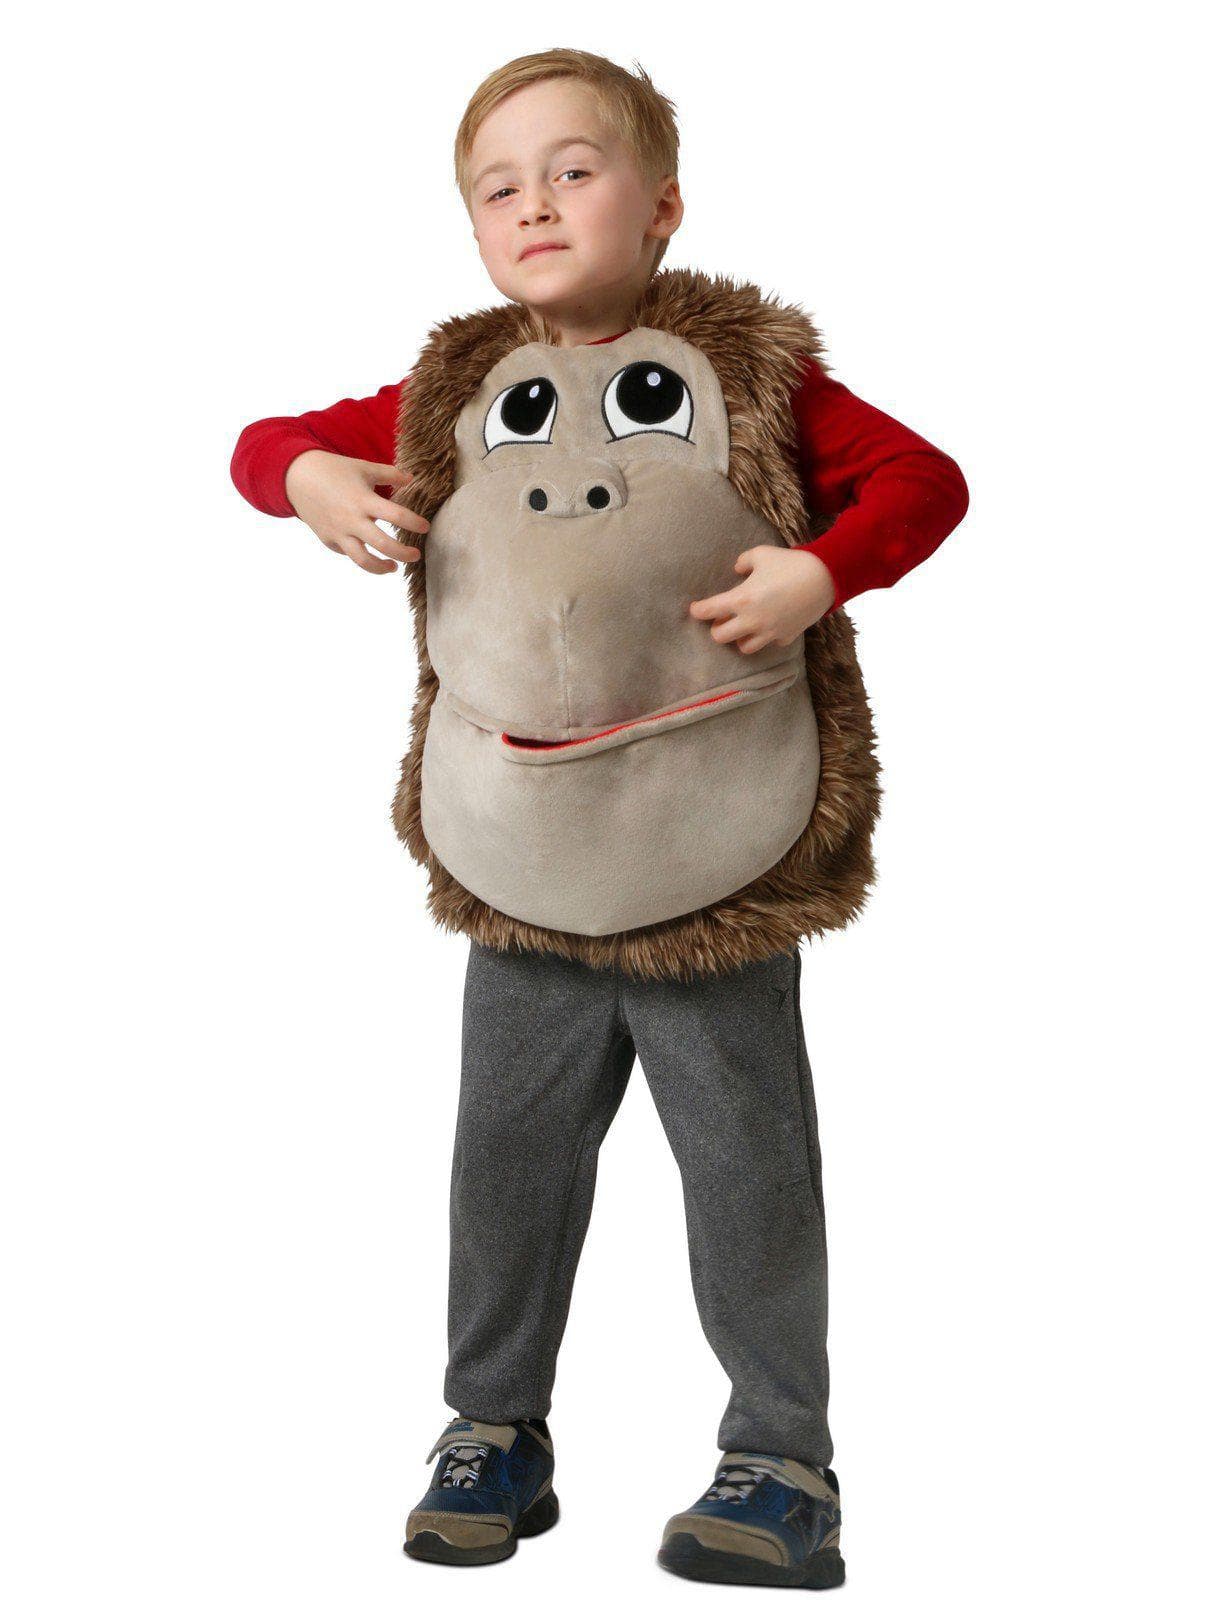 Kid's Feed Me Gorilla Costume - costumes.com